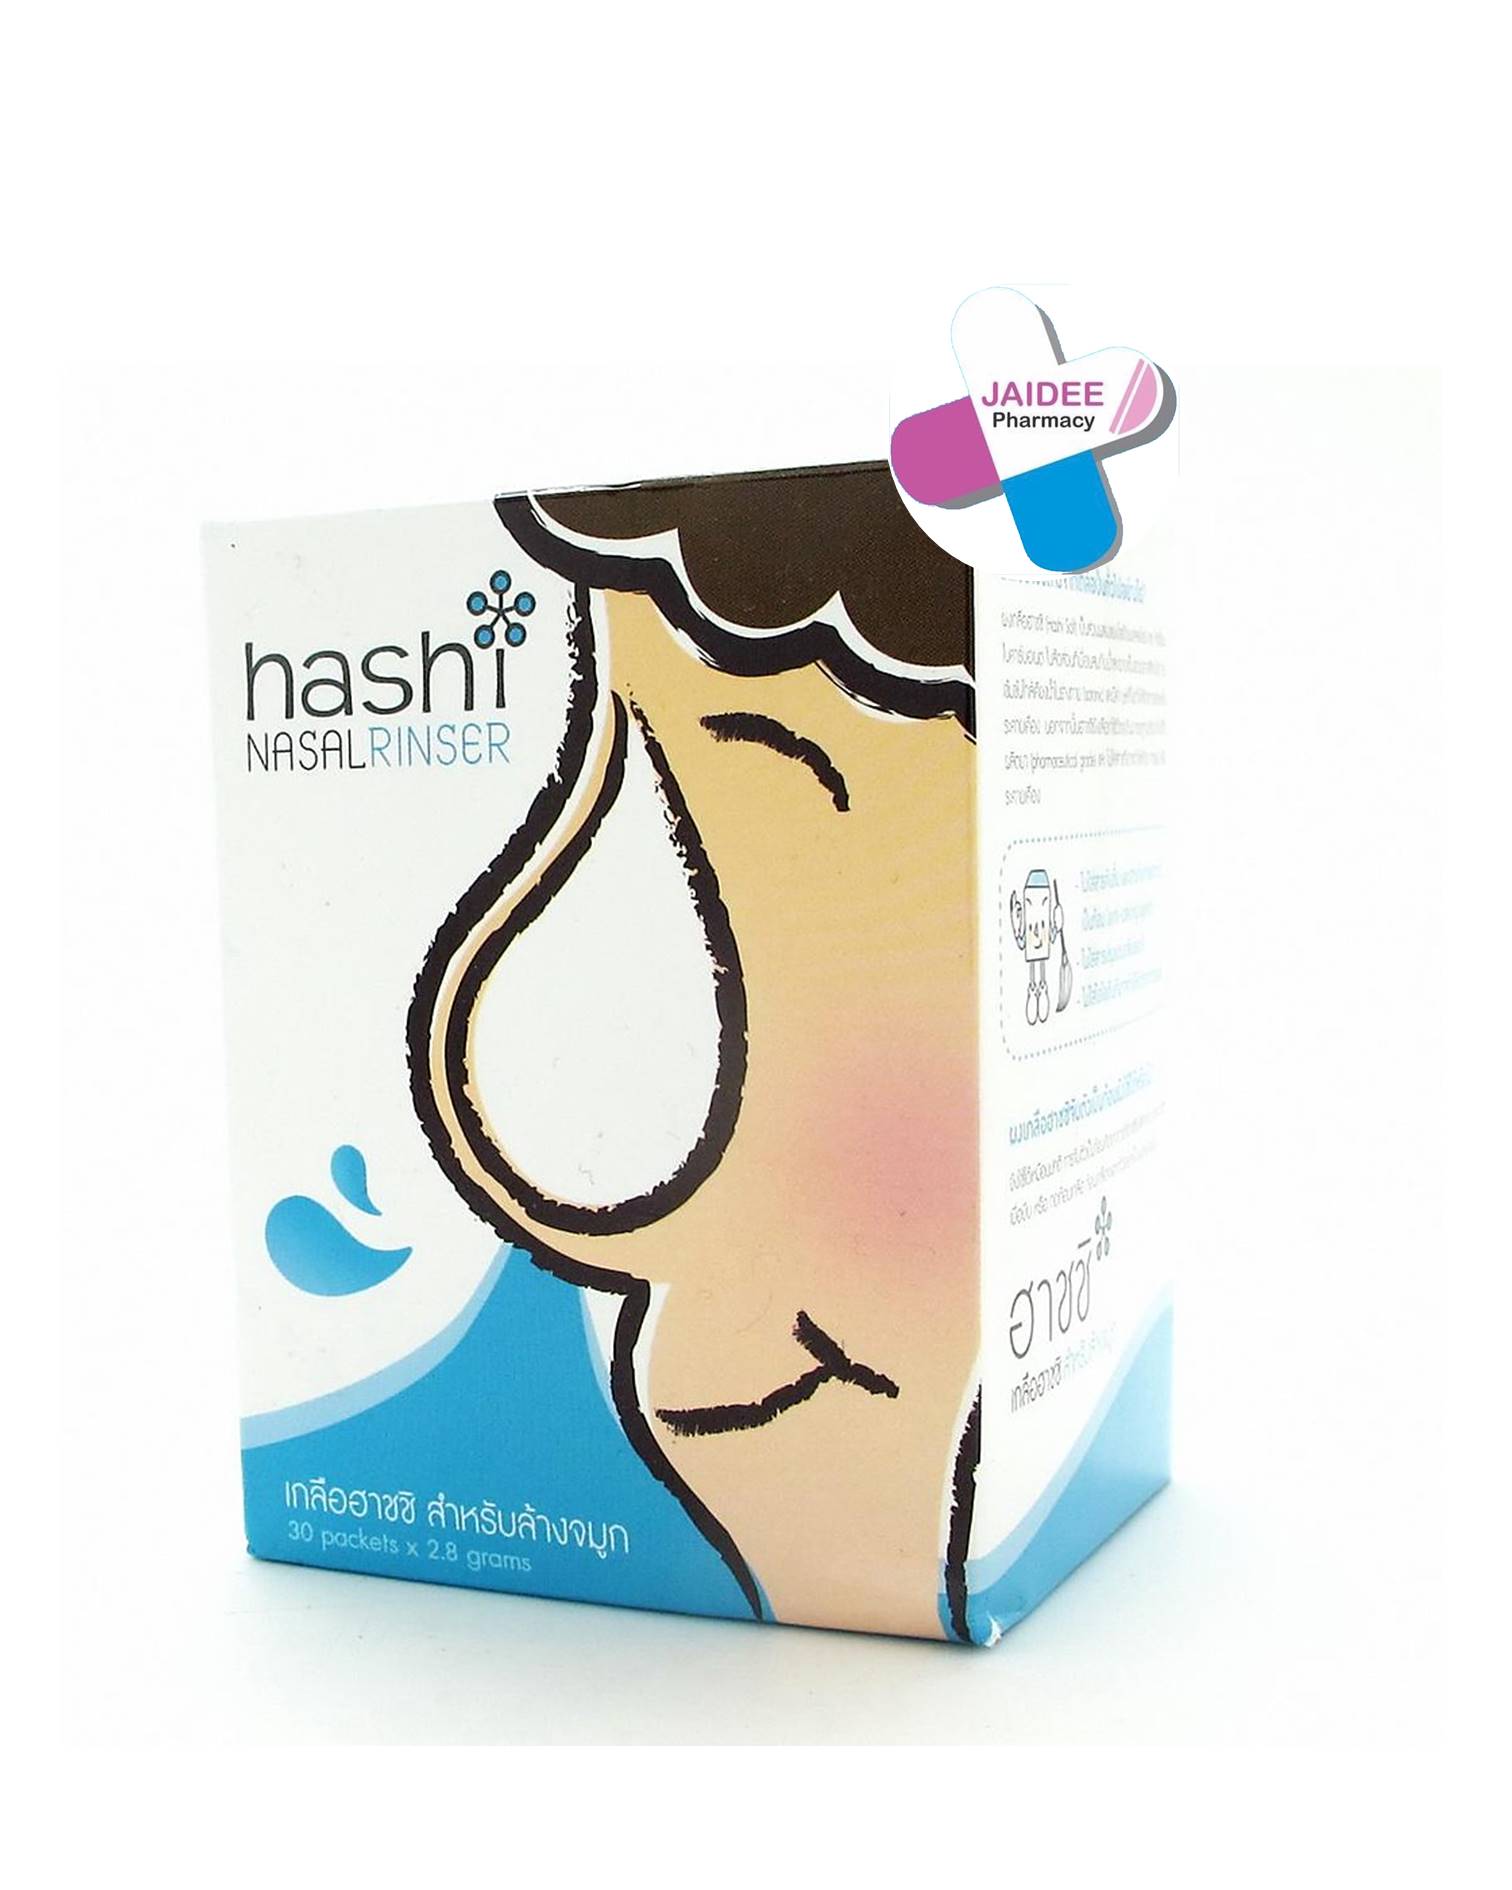 Hashi Salt Nasal Rinser (เกลือสำหรับล้างจมูก) 30 ซอง*1 กล่อง สูตรออริจินอล (สีฟ้า)